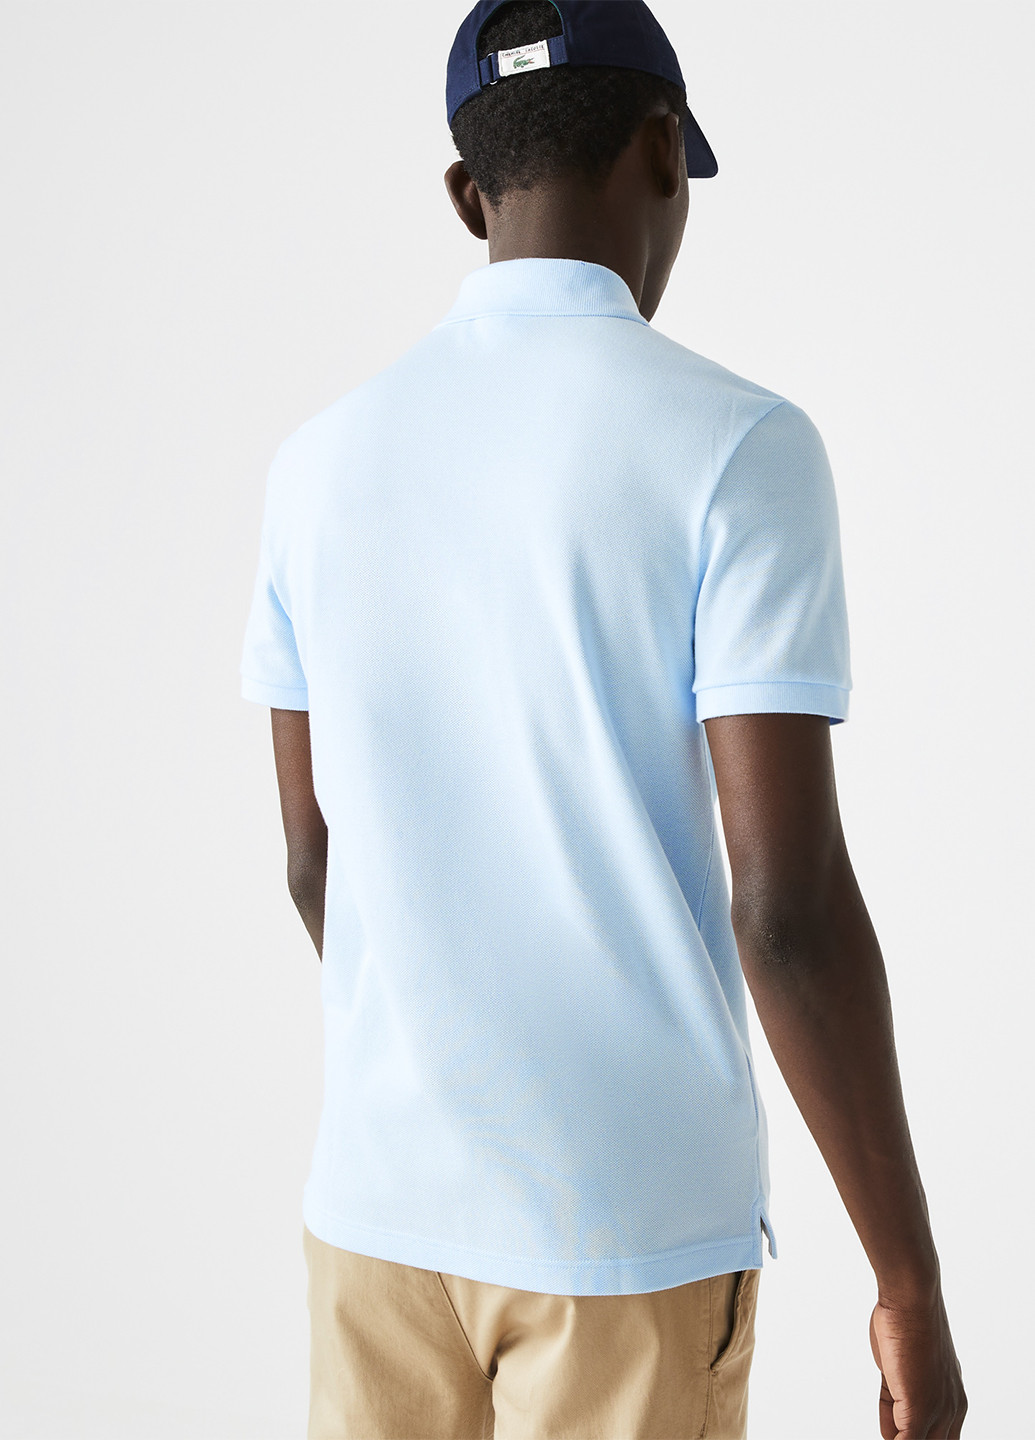 Голубой футболка-поло для мужчин Lacoste с логотипом